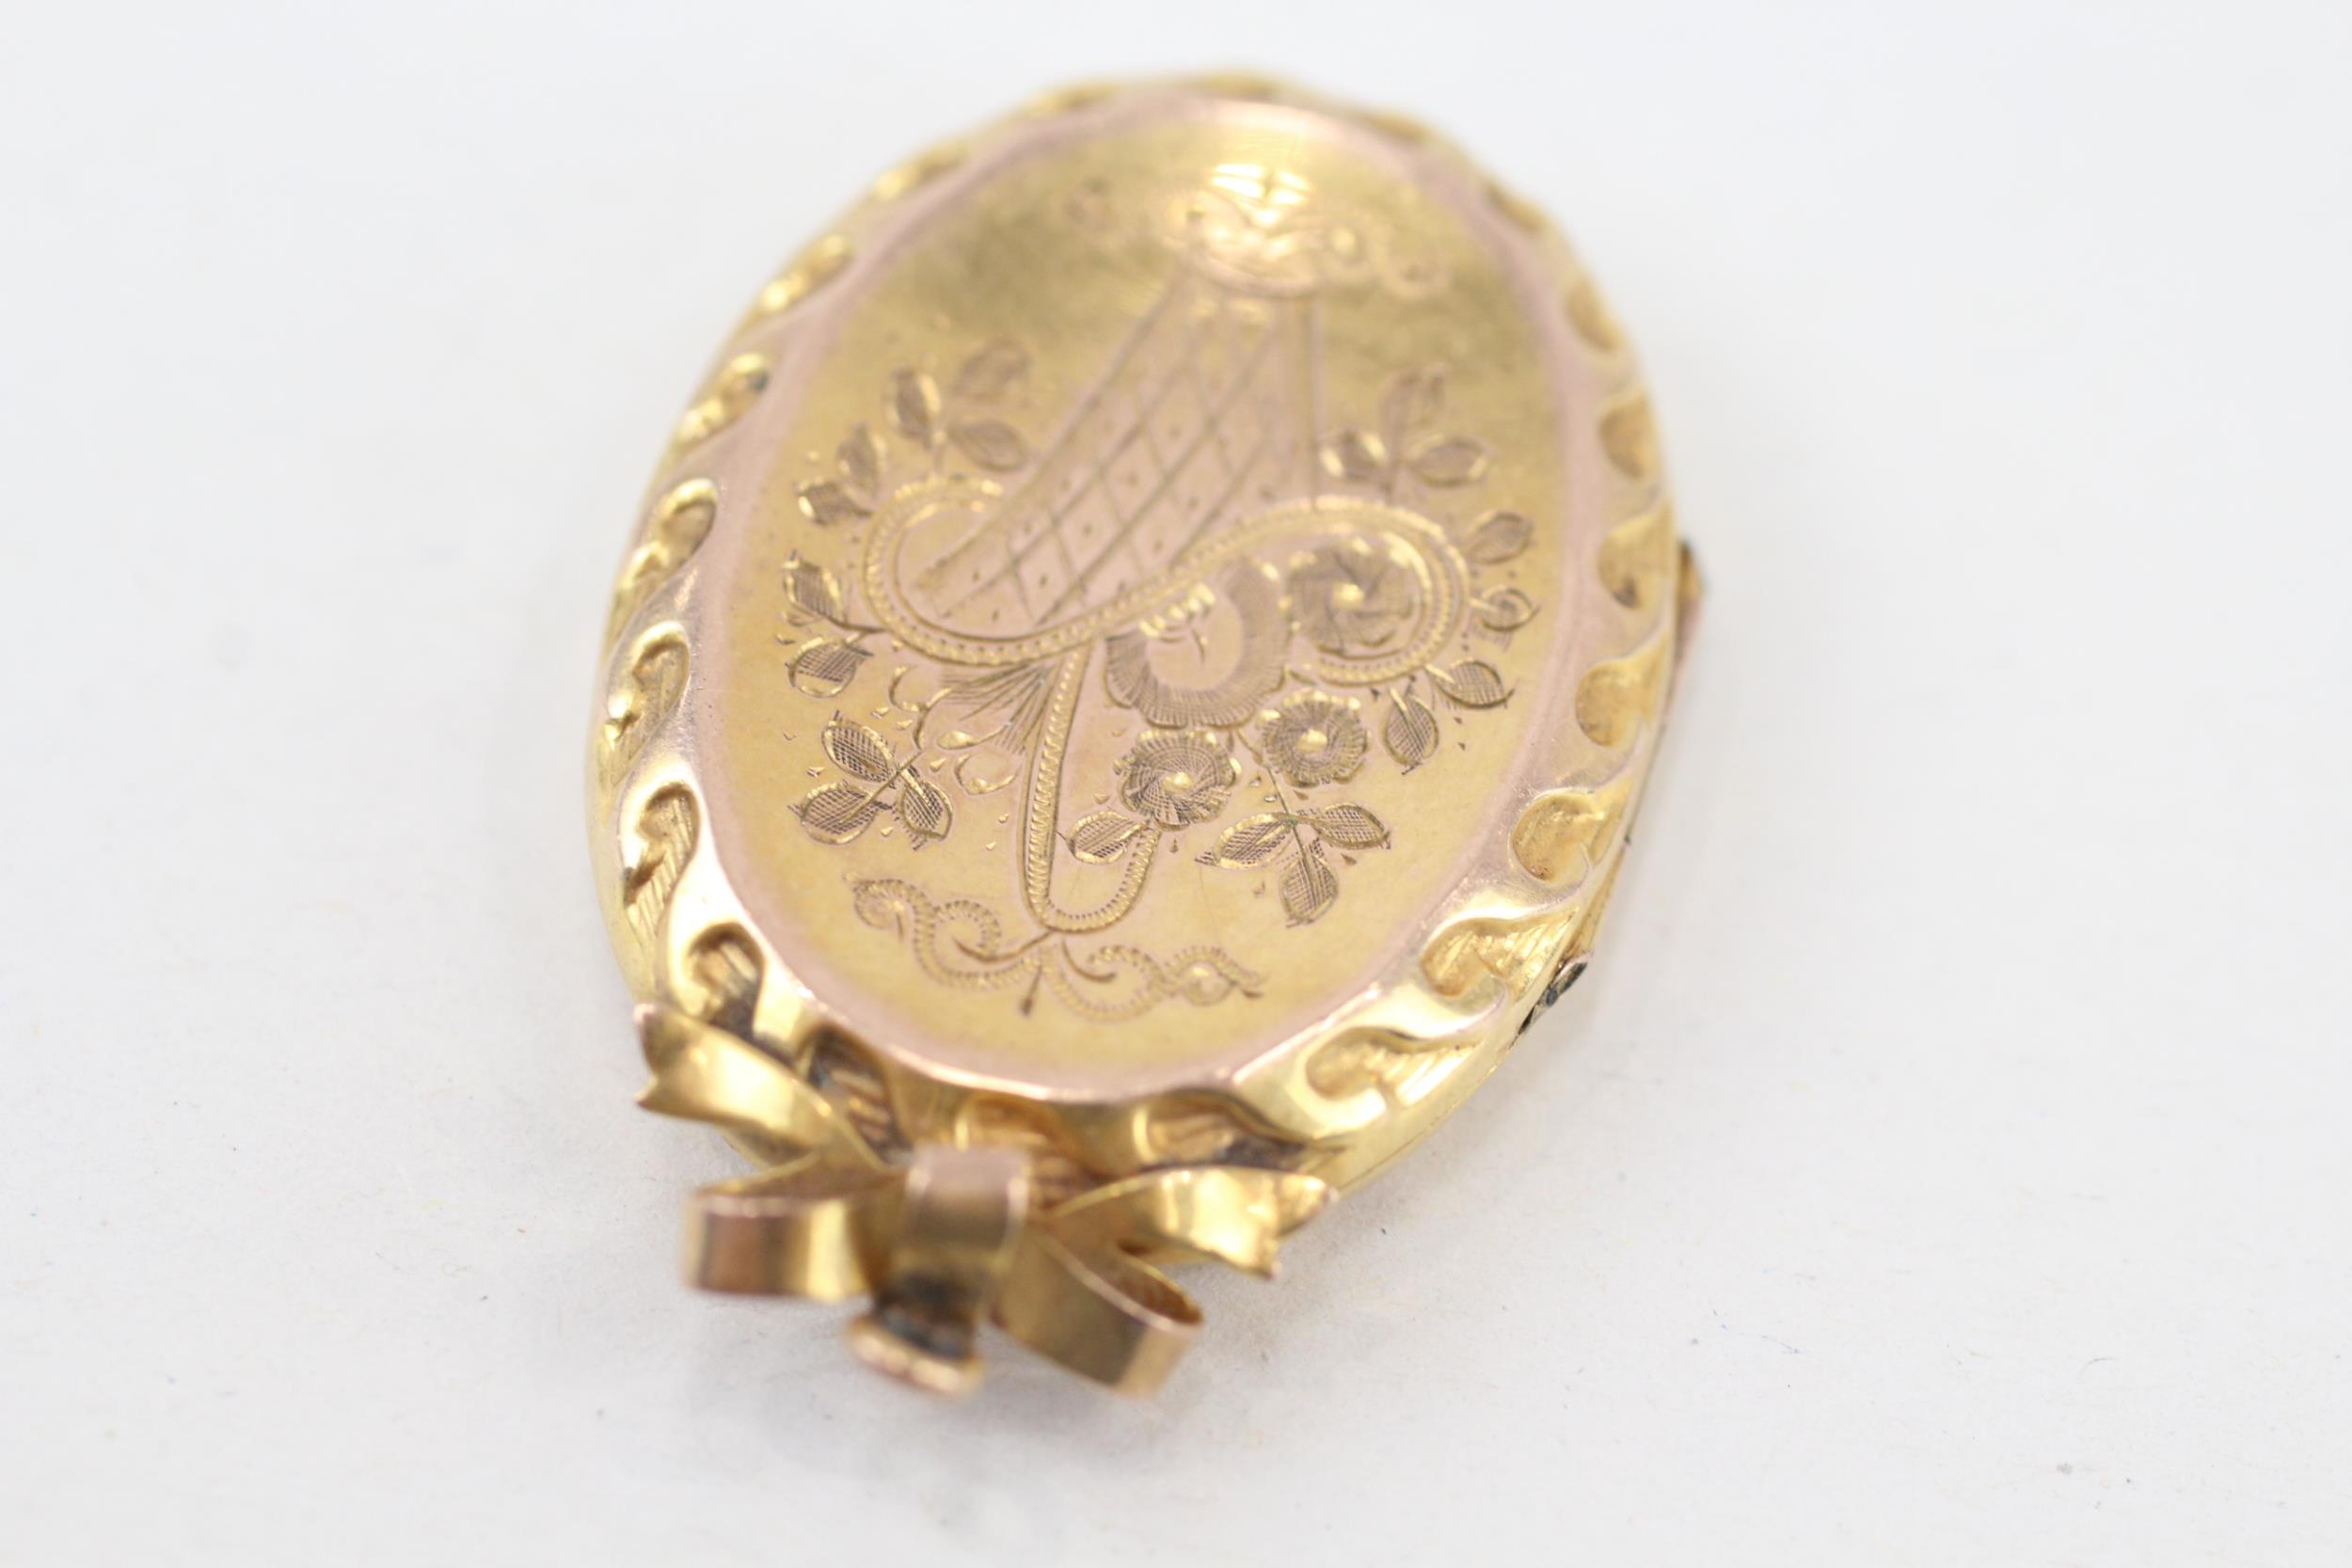 9ct gold back & front Victorian patterned locket (5.7g) - Image 3 of 4